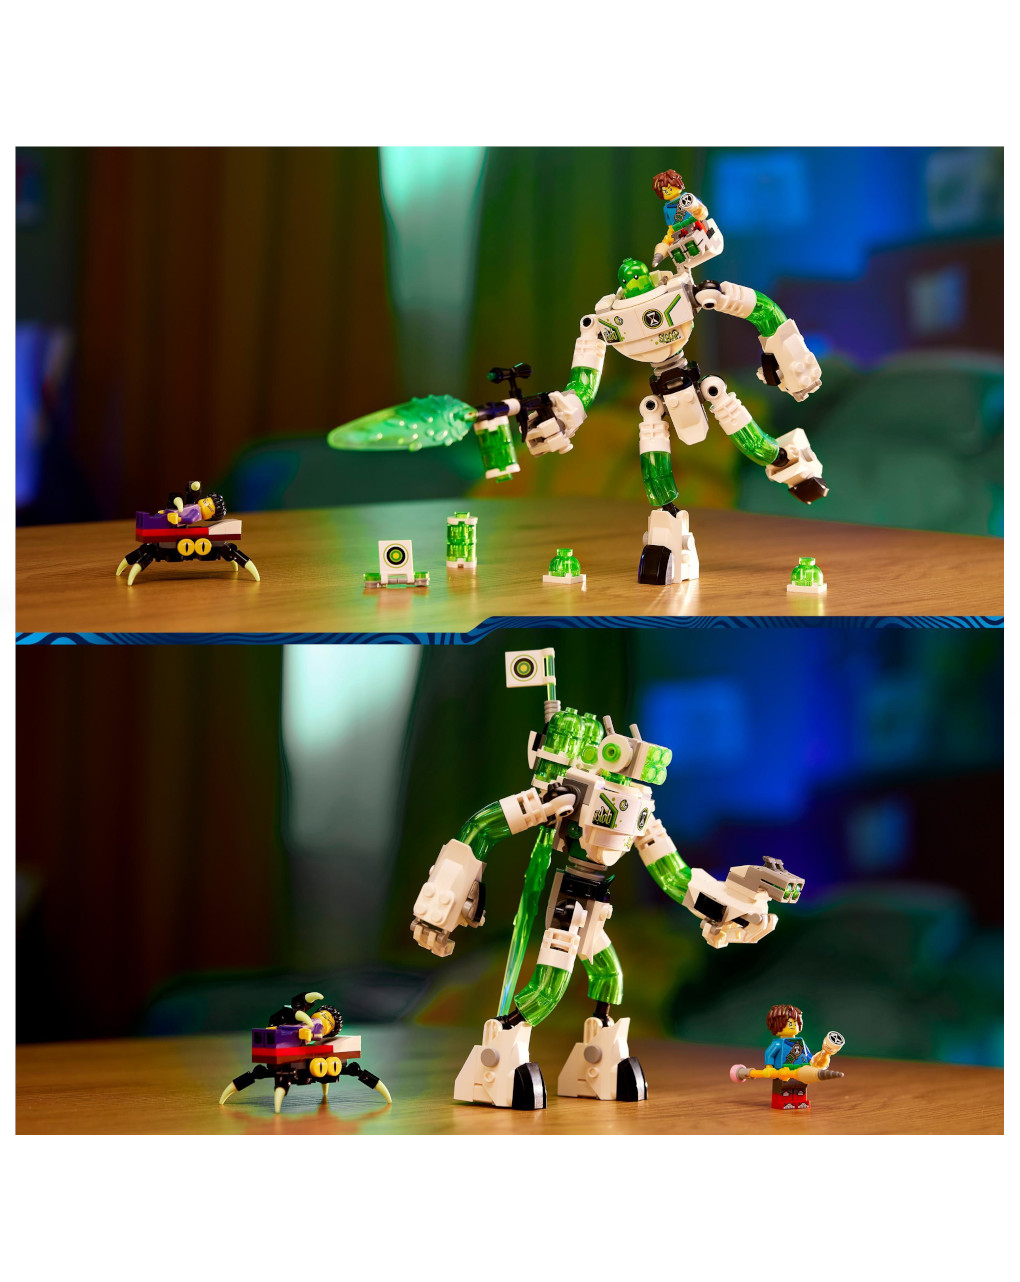 Mateo y el robot z-blob 71454 - lego dreamzzz - LEGO DREAMZZZ